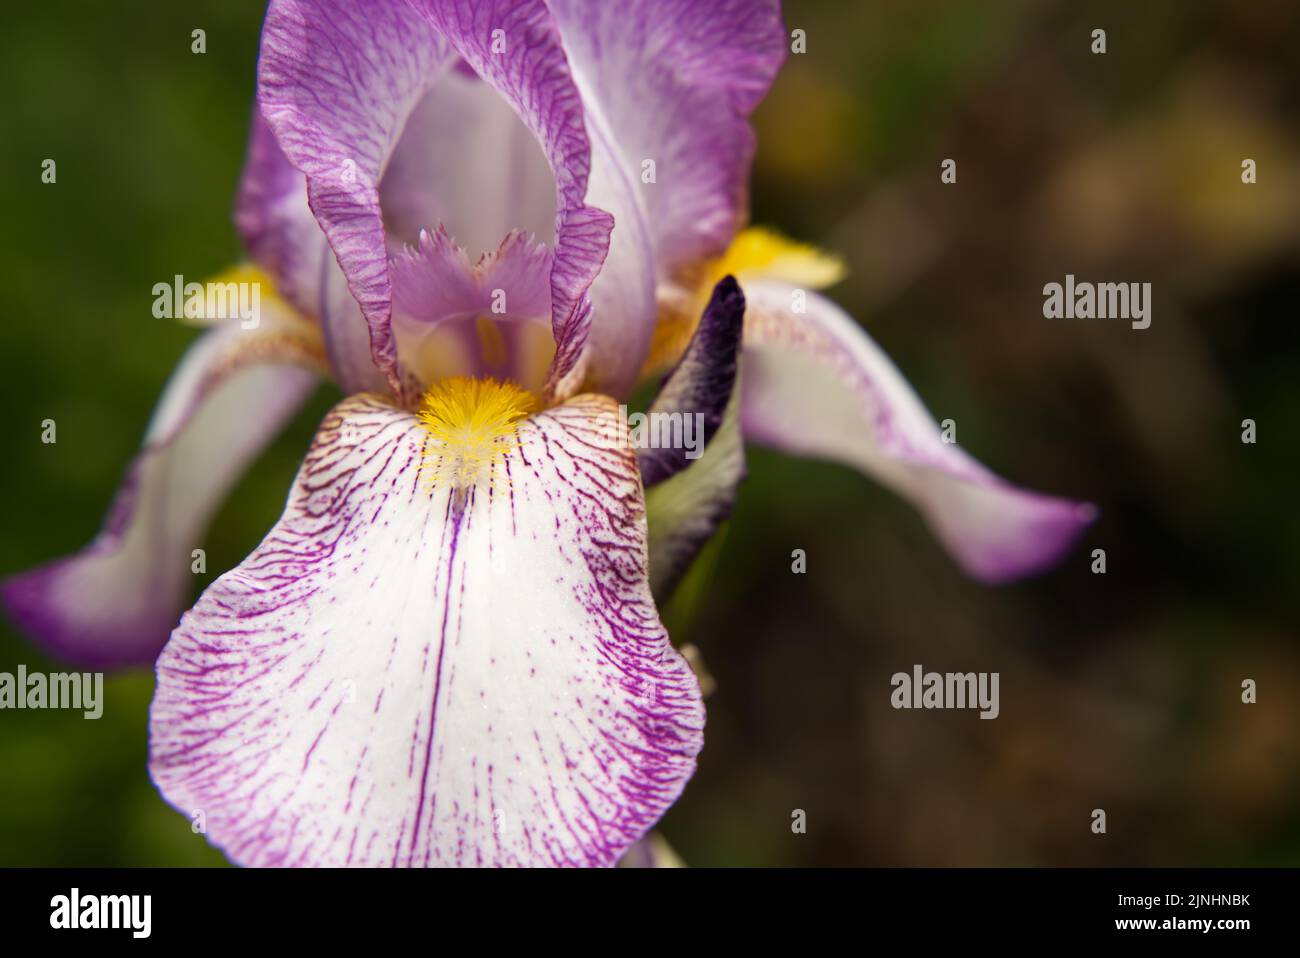 A closeup of an Iris sanguinea flower on a blurred background Stock Photo